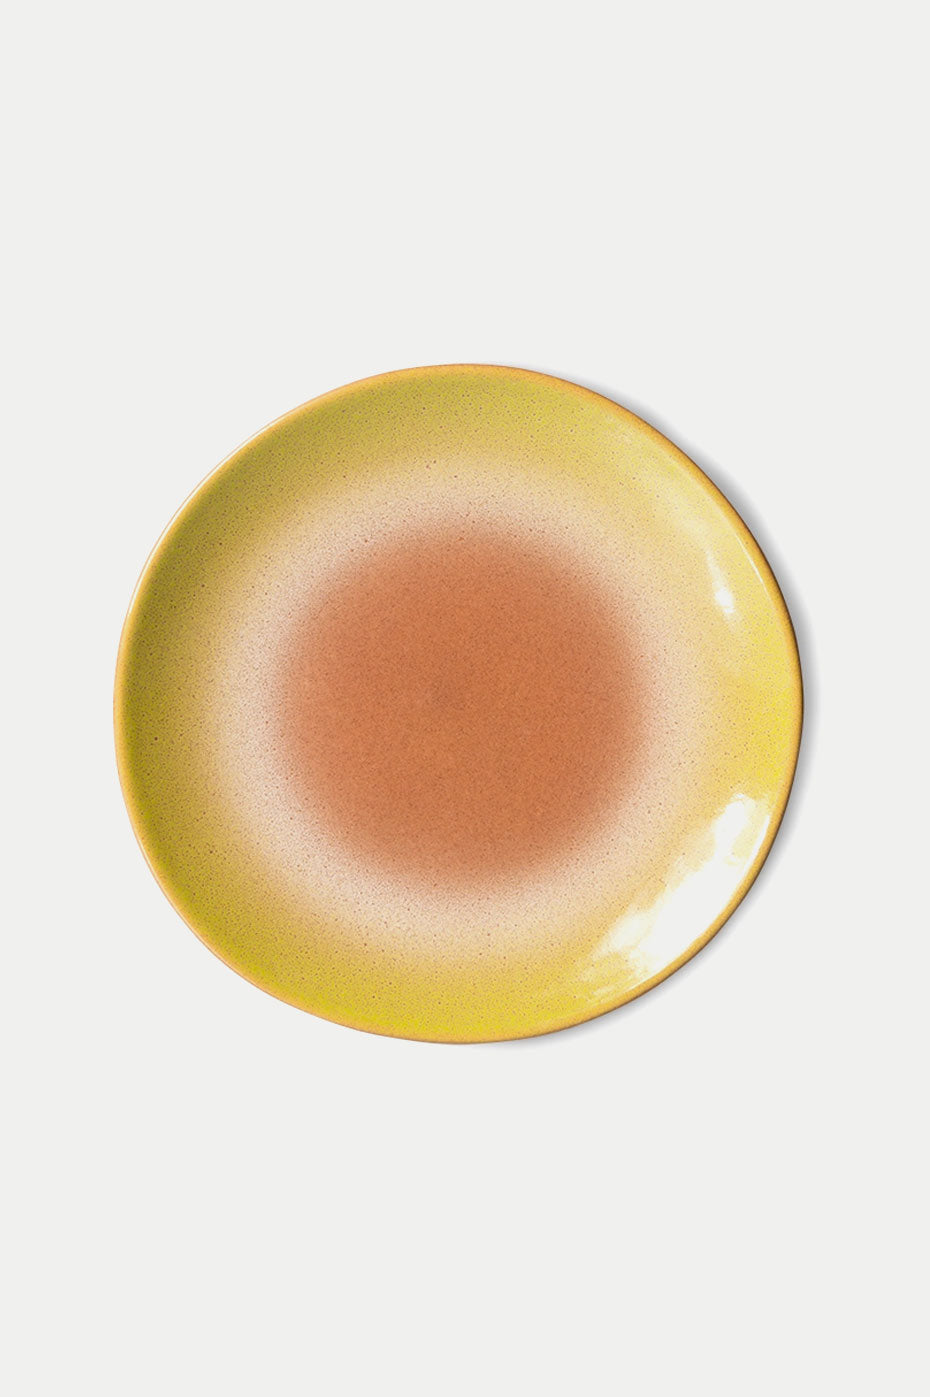 Eclipse 70s Ceramics Dessert Plate